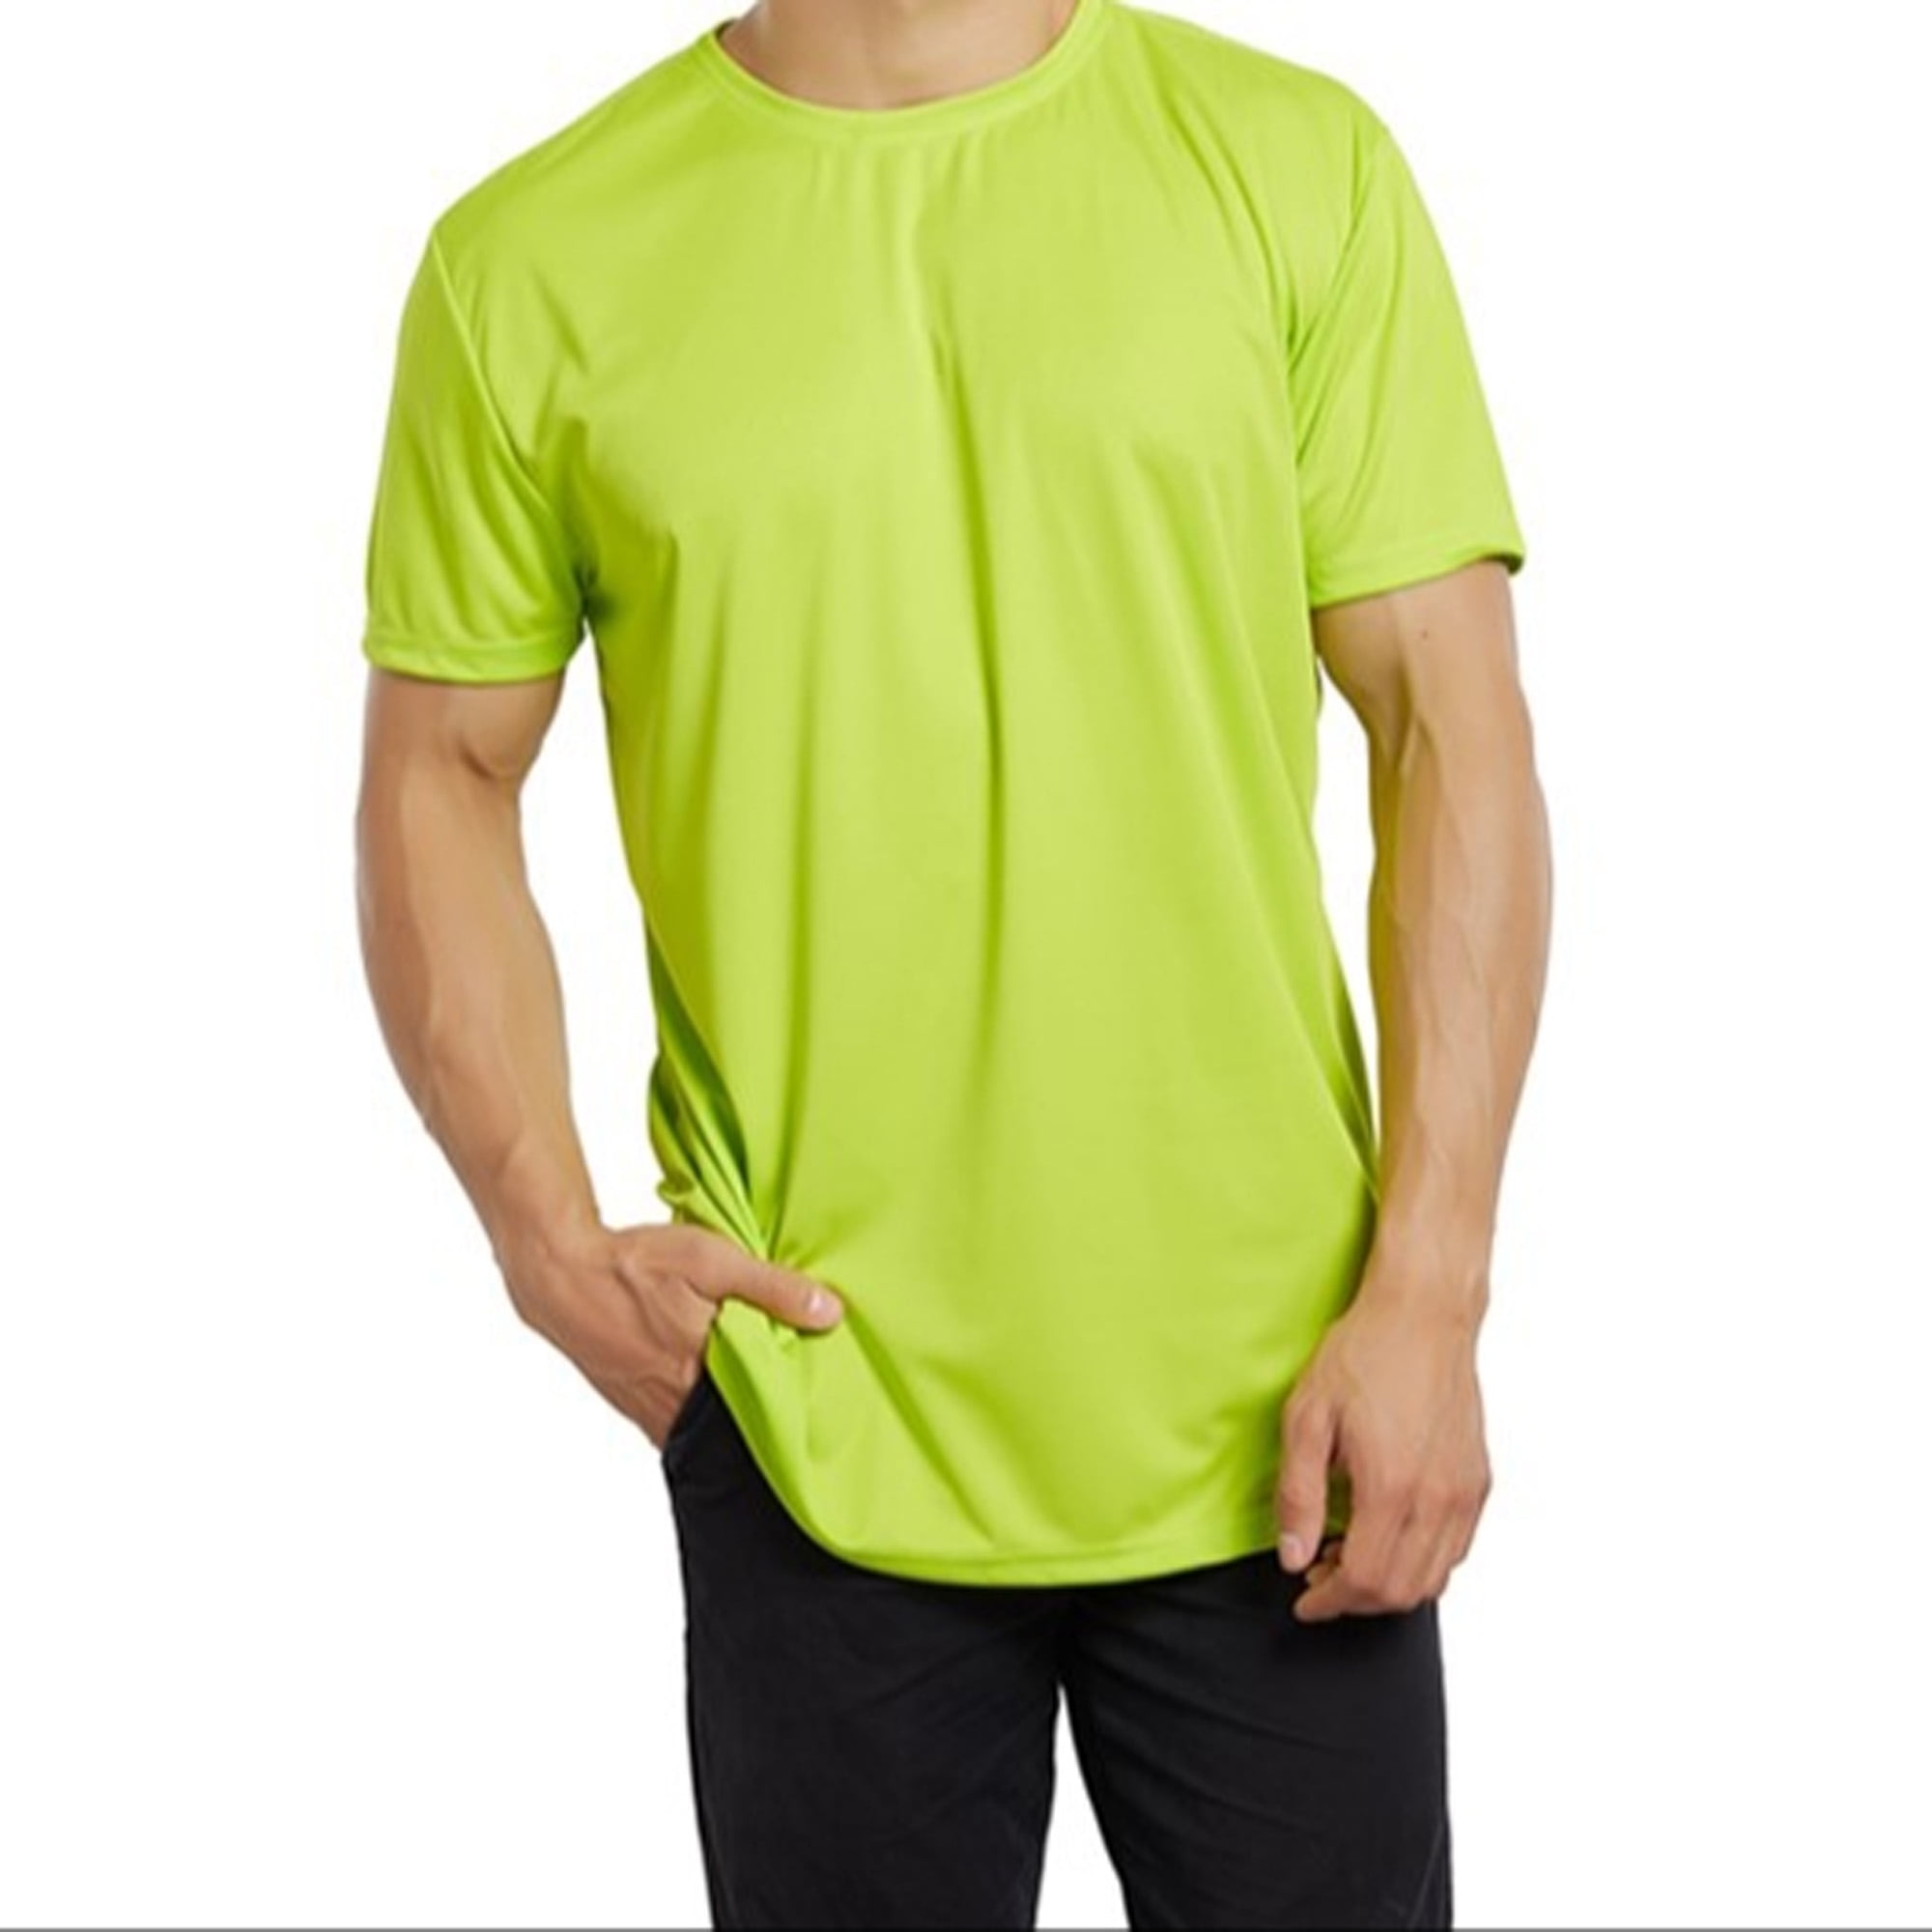 4POSE Women's Short Sleeve Active T Shirt Quick Dry Sports Yoga Tops Light  Green M